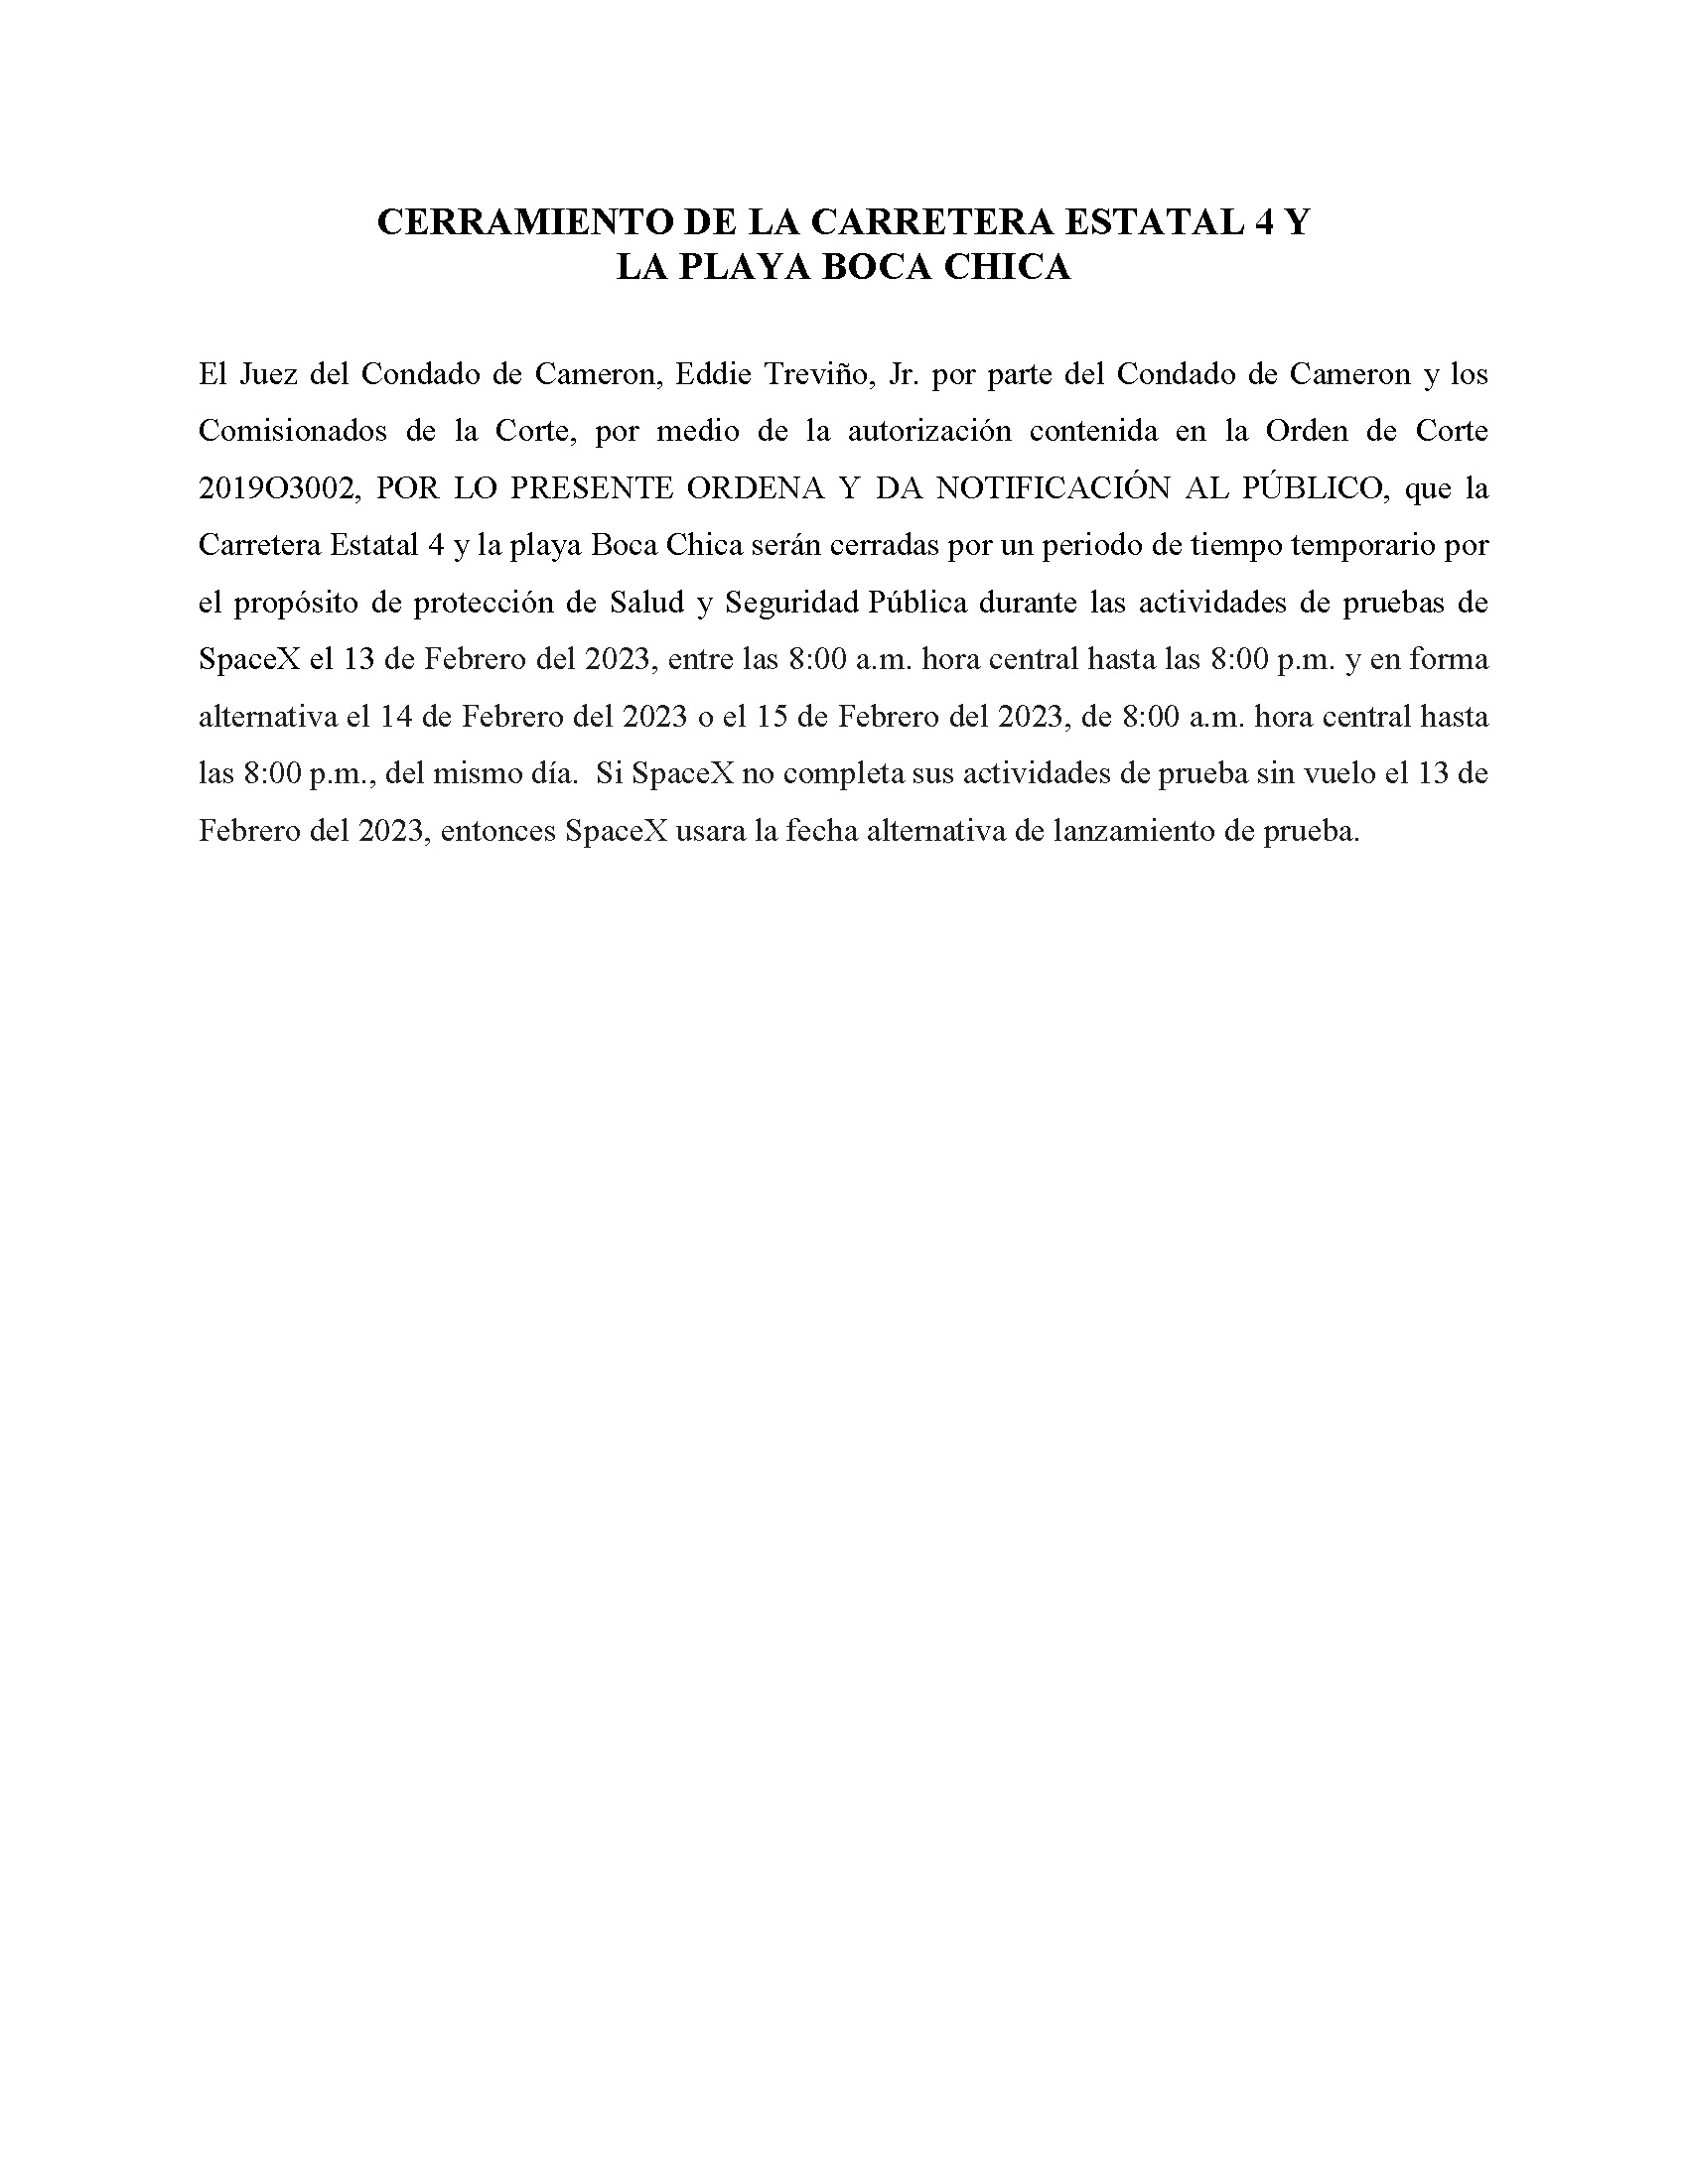 ORDER.CLOSURE OF HIGHWAY 4 Y LA PLAYA BOCA CHICA.SPANISH.02.13.23